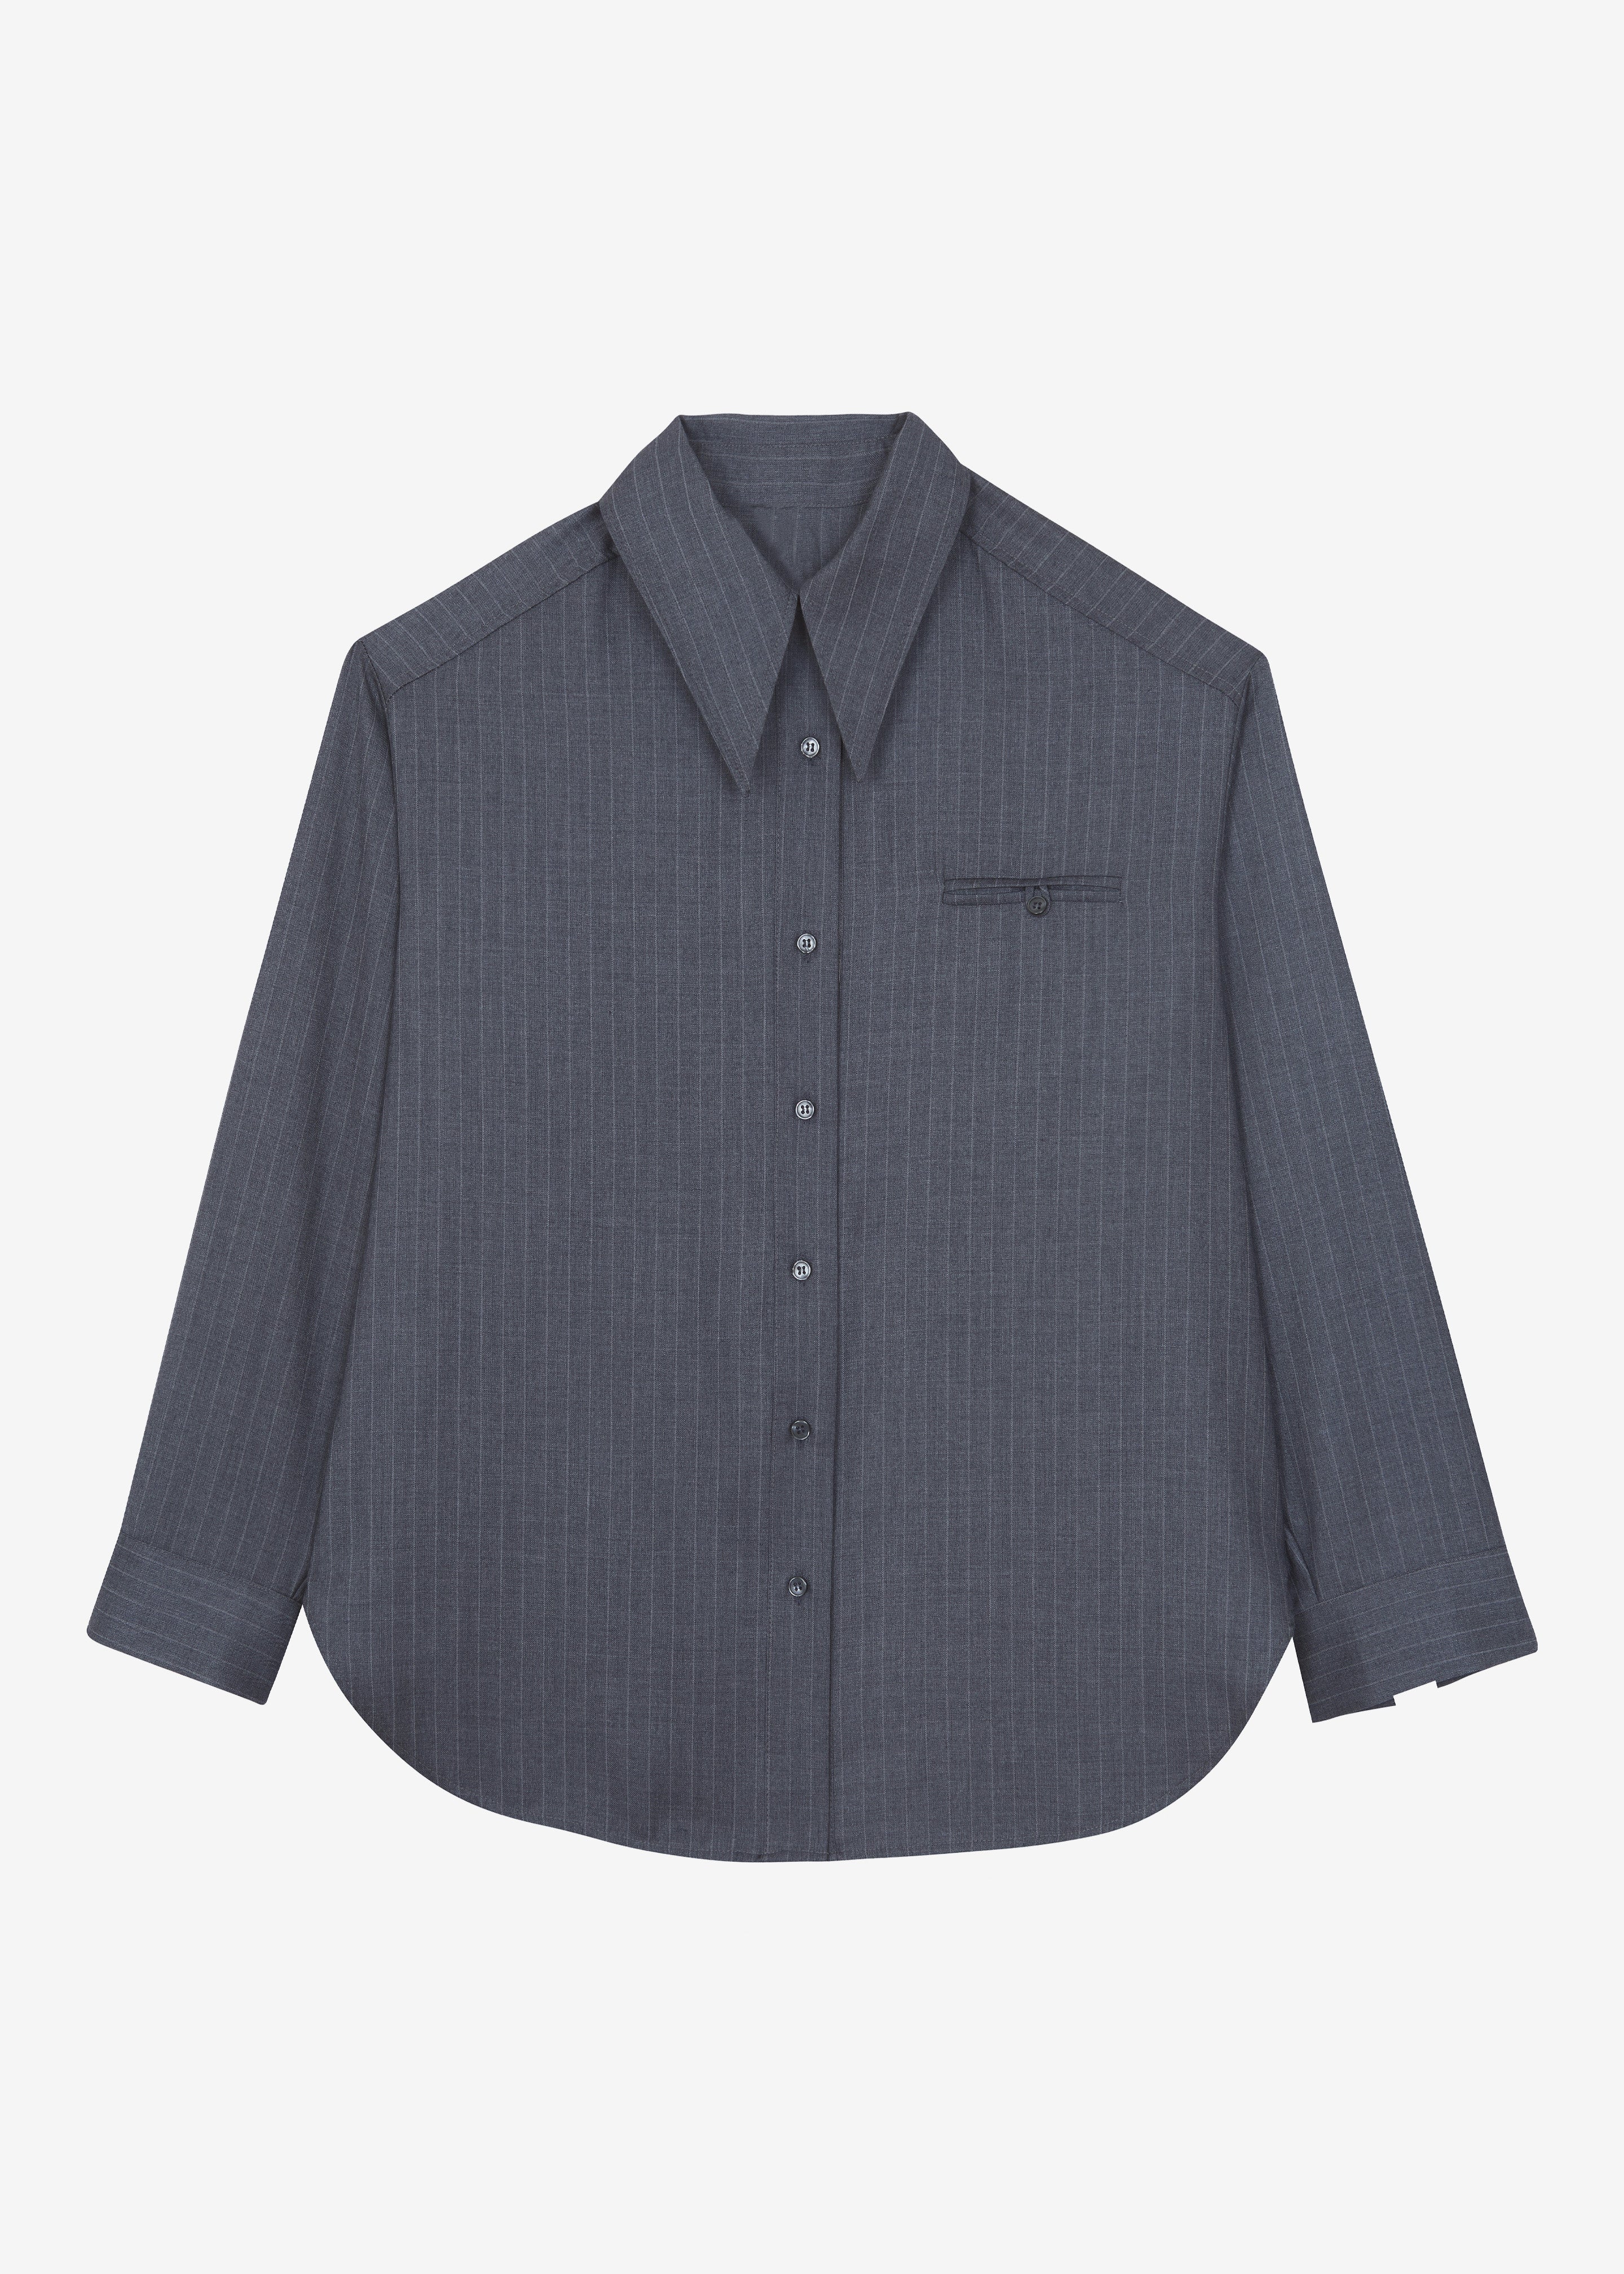 Kerry Button Up Shirt - Grey Pinstripe - 25